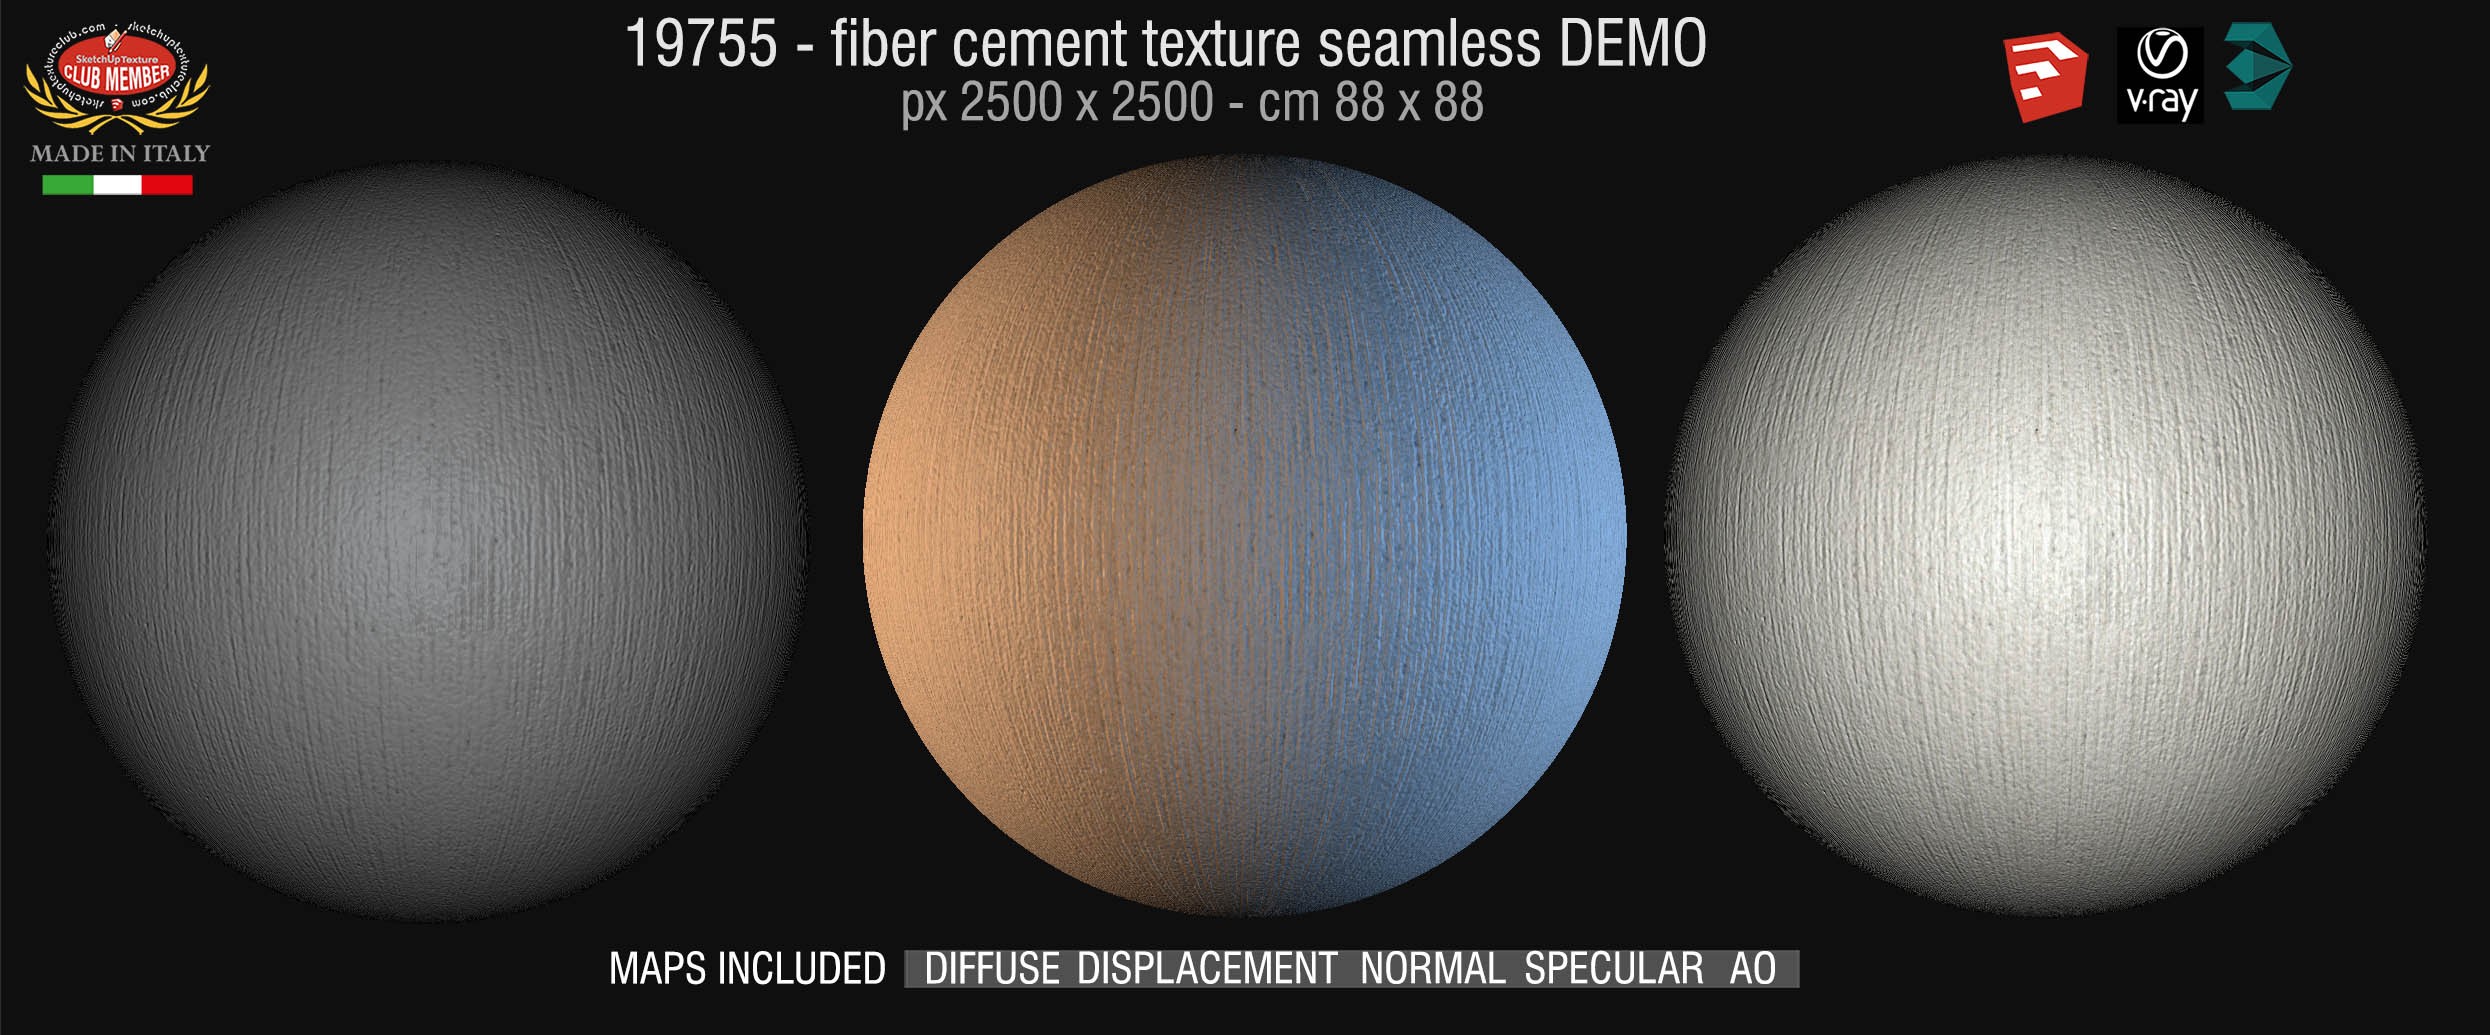 19755 HR Fiber cement texture + maps DEMO